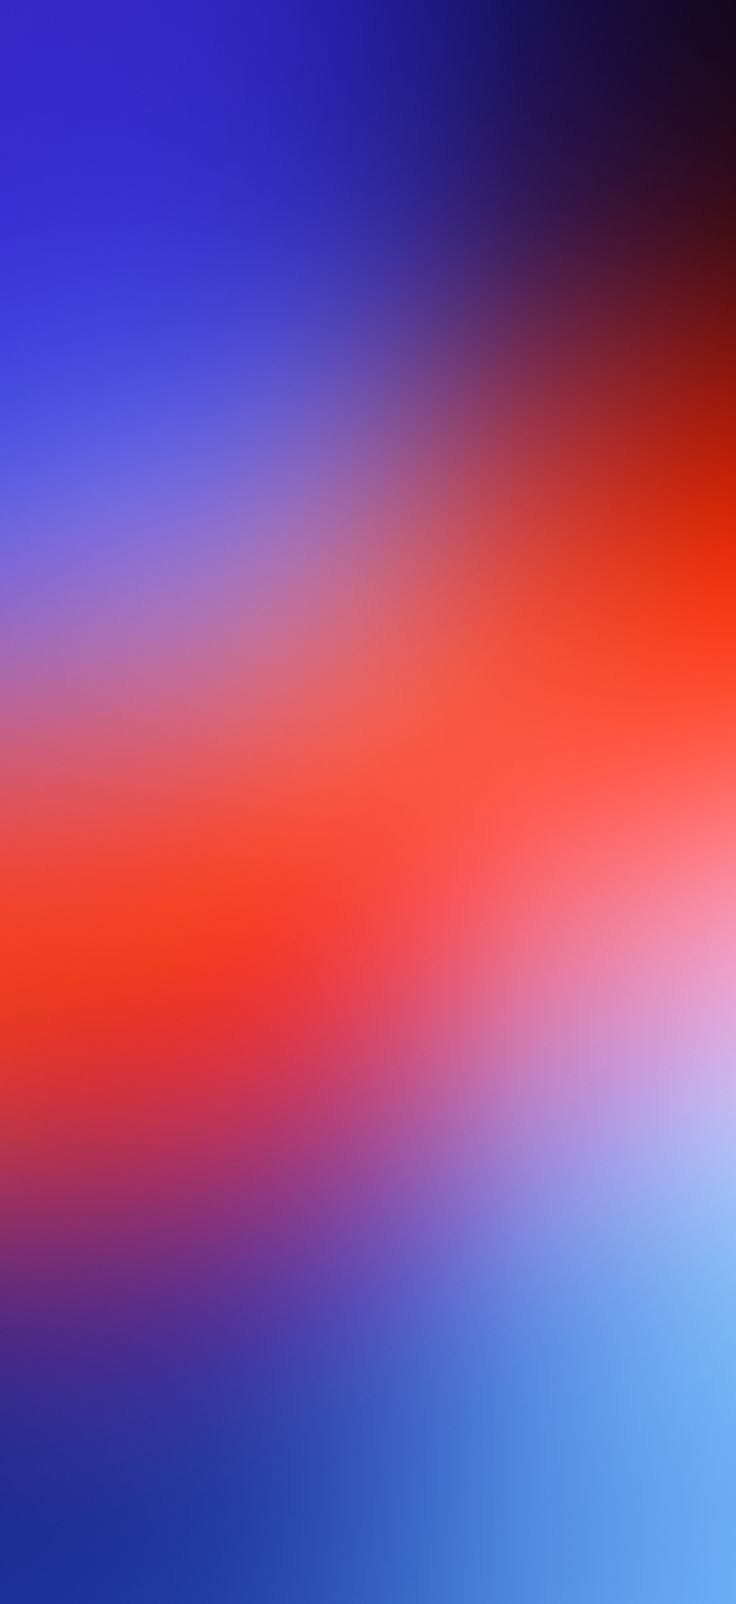 blue to red to blue gradient by evgeniyzemelko. iPhone lockscreen wallpaper, Wallpaper iphone love, iPhone colors